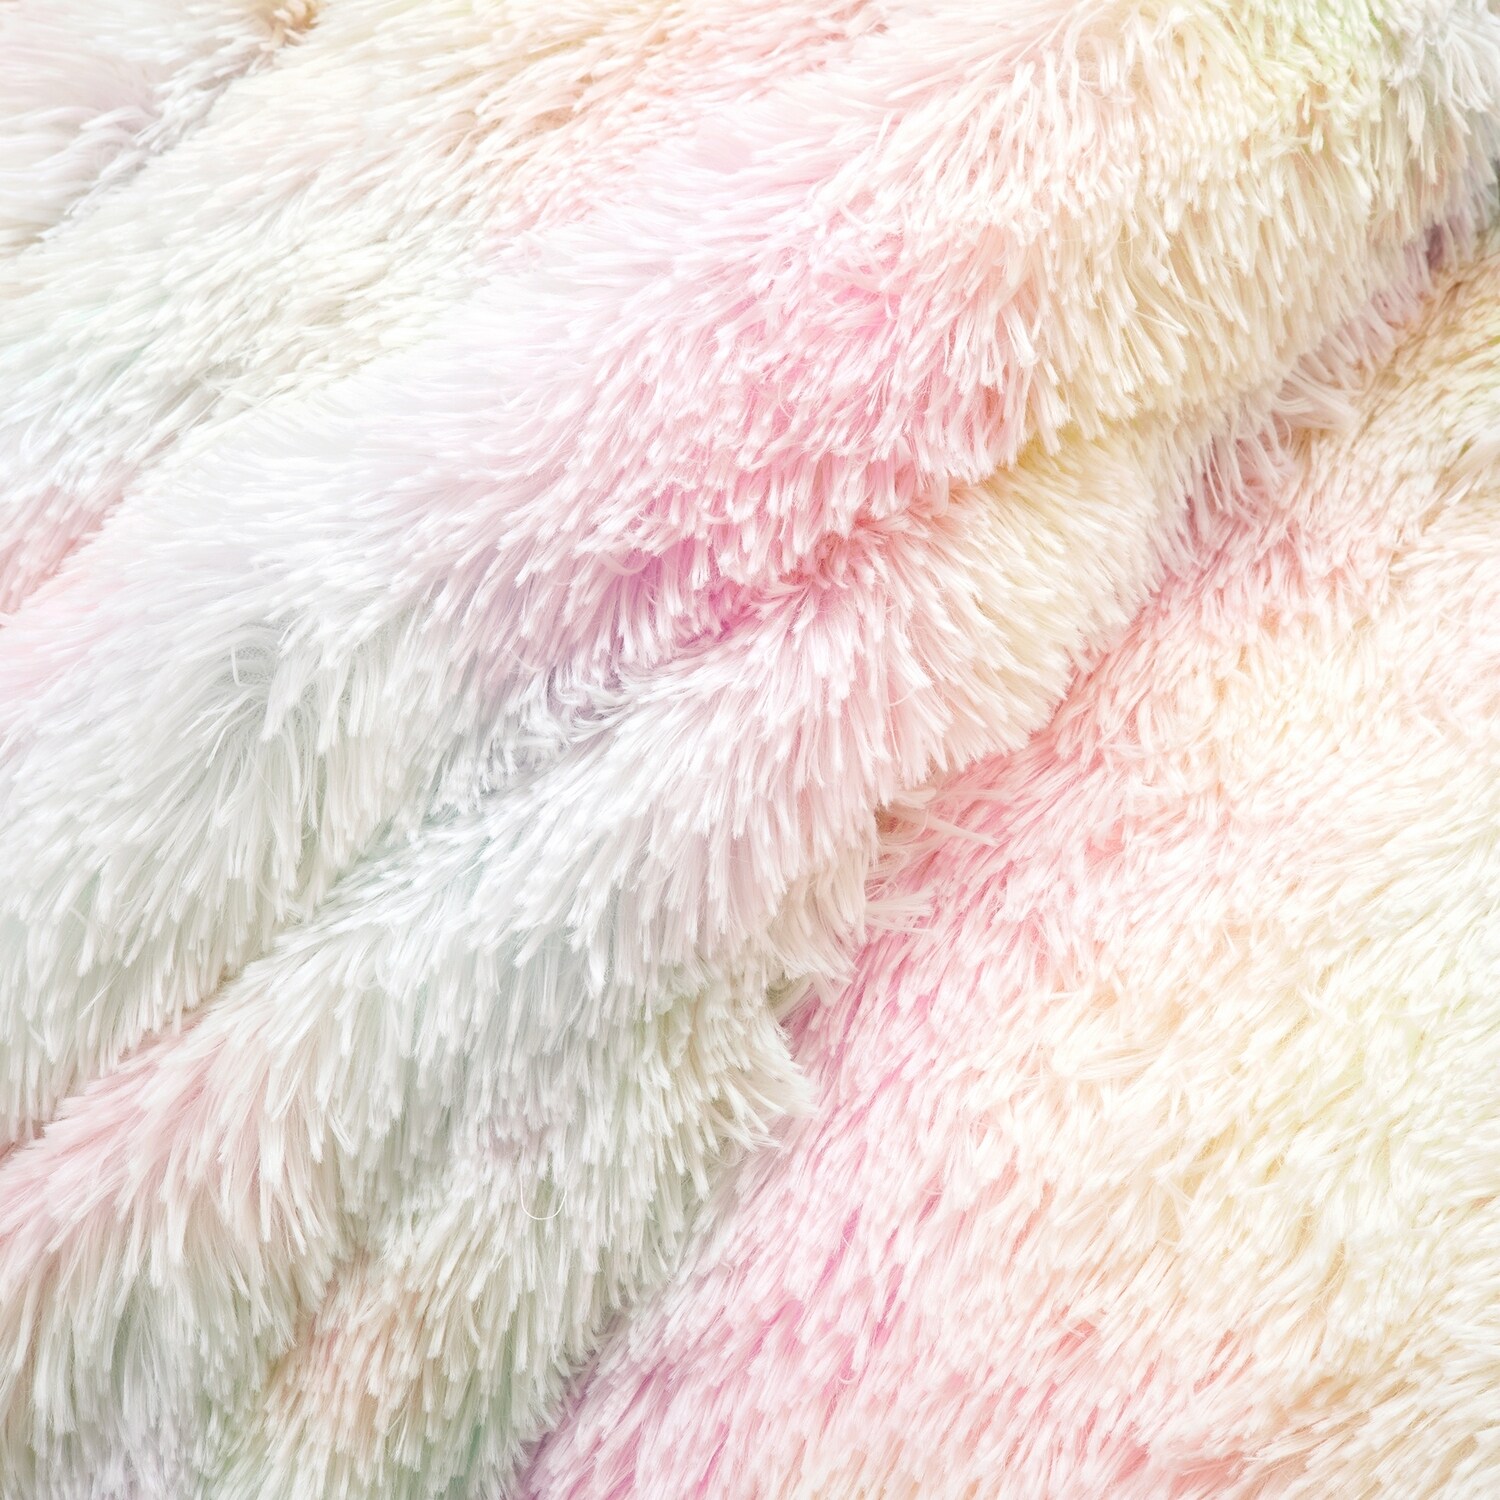 Emma Faux Fur Comforter Set, Lush Decor